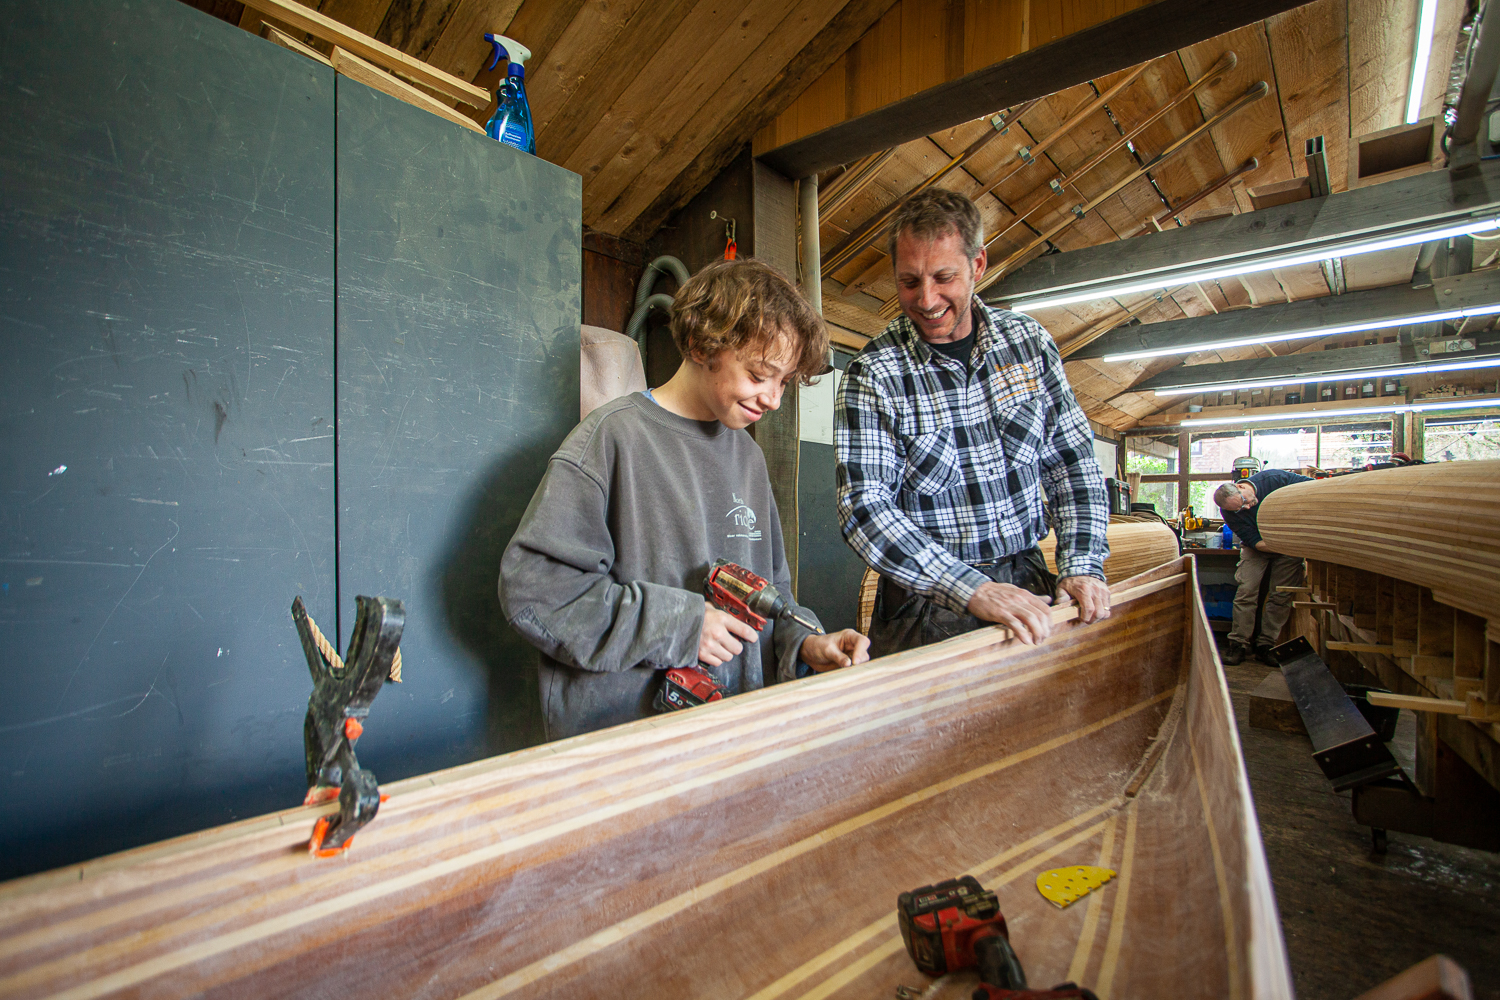 Workshop canoe building